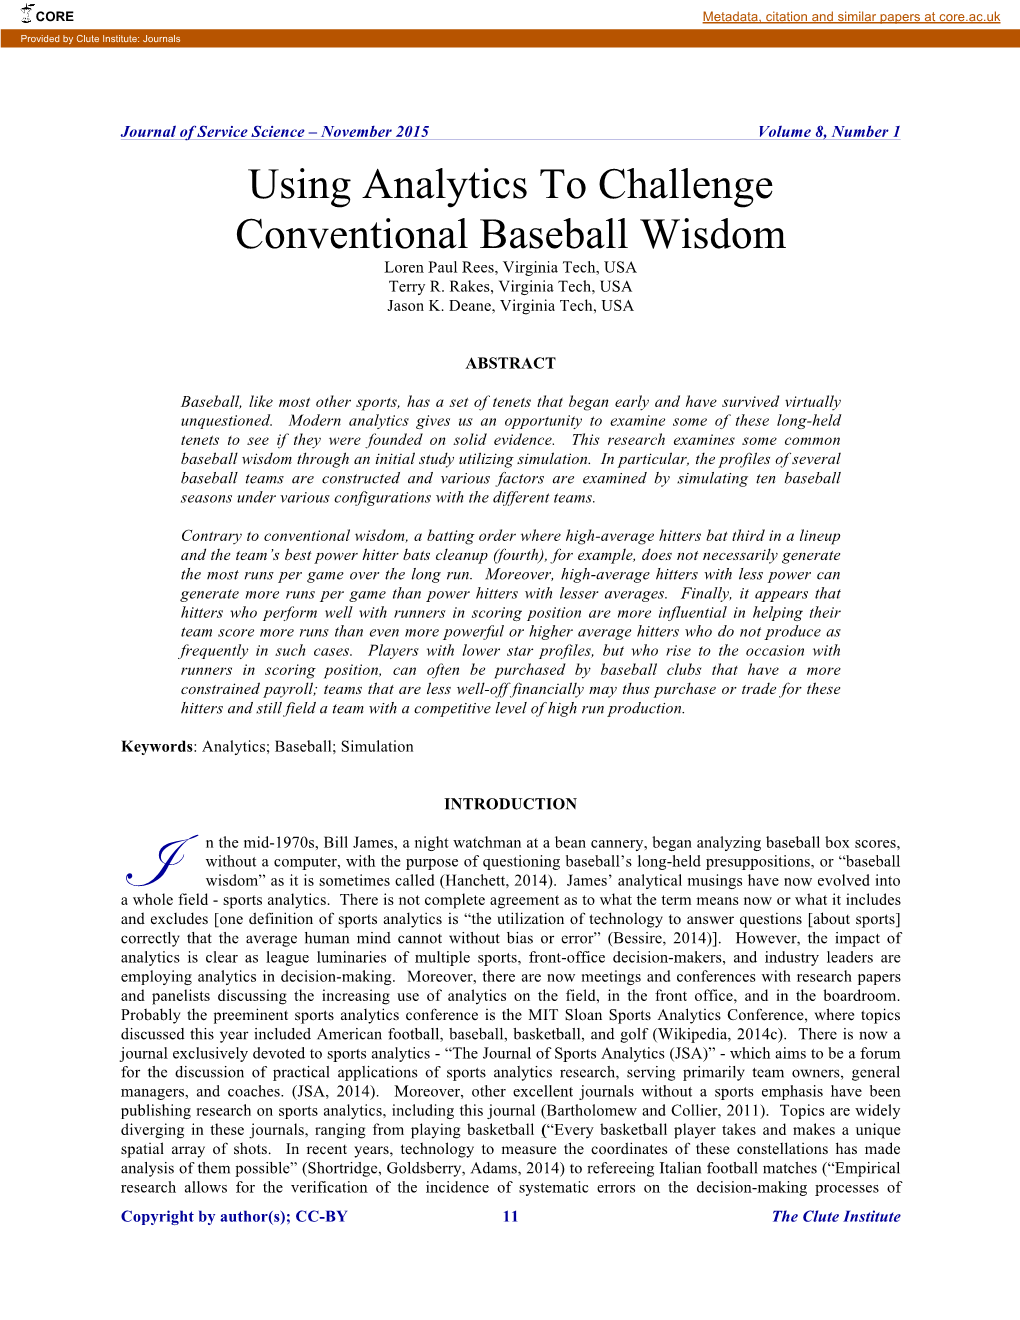 Using Analytics to Challenge Conventional Baseball Wisdom Loren Paul Rees, Virginia Tech, USA Terry R